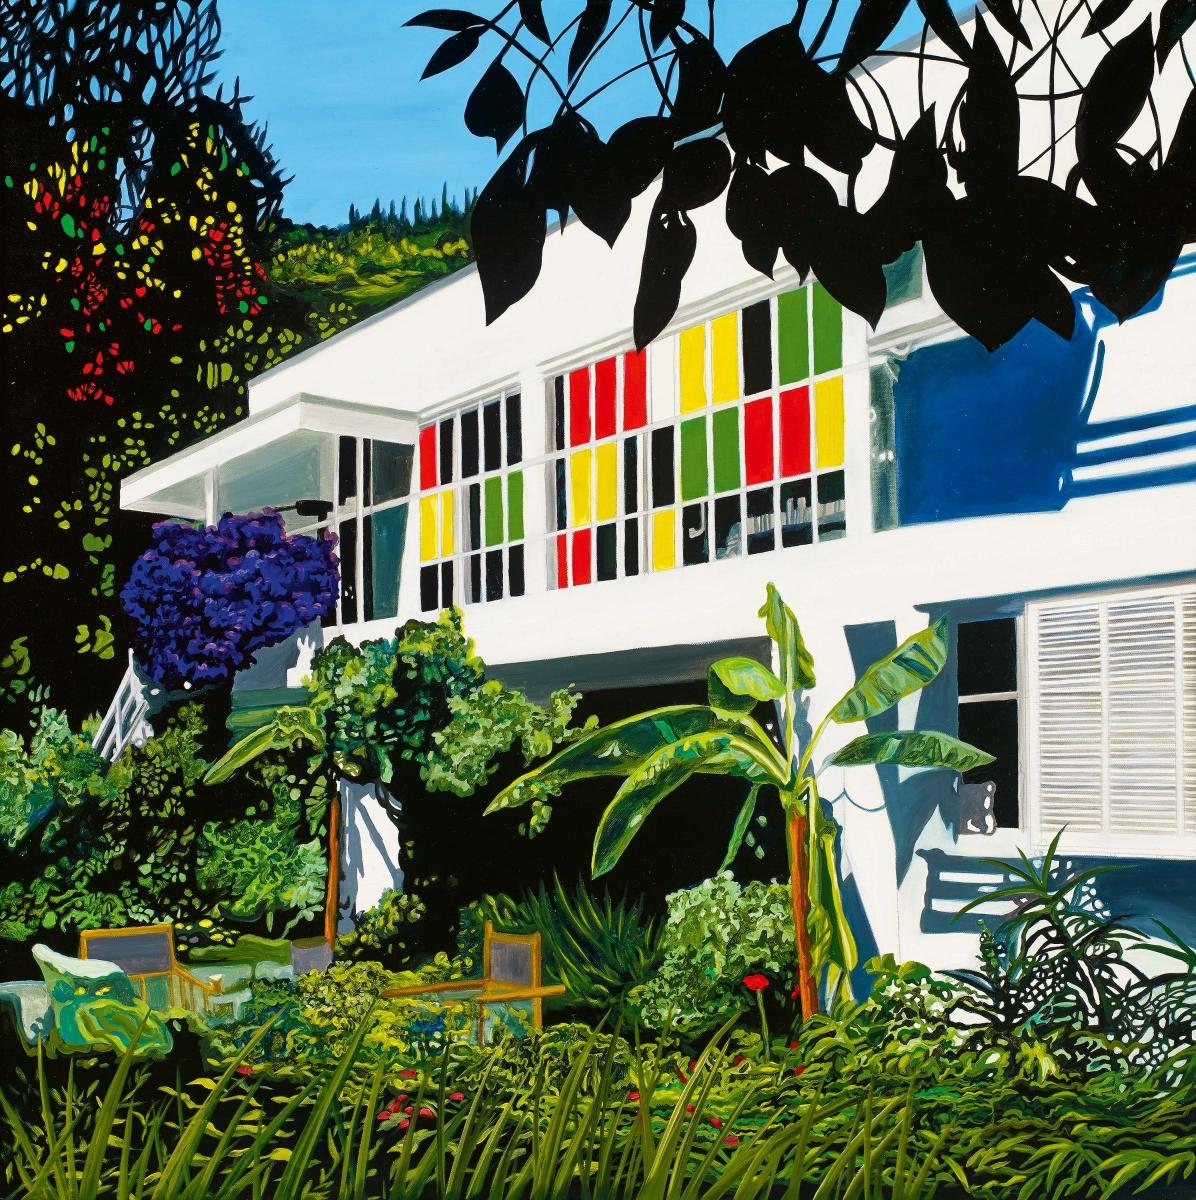 Eamon OKane - E-1027 with Le Corbusier colour blinds, 300001-3310, Van Ham Kunstauktionen